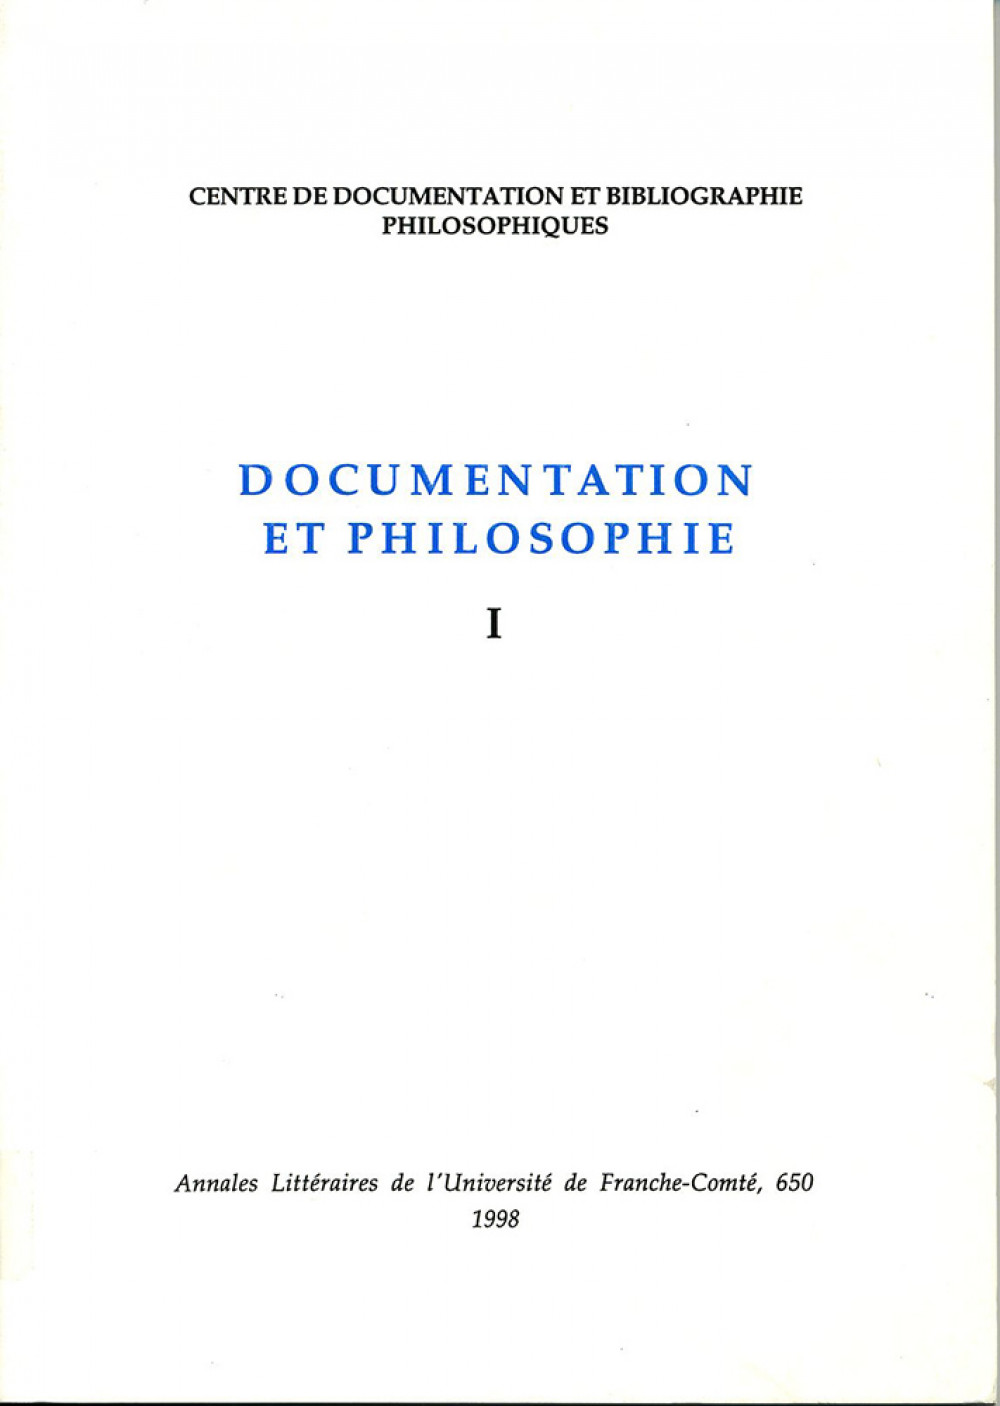 Documentation et philosophie I